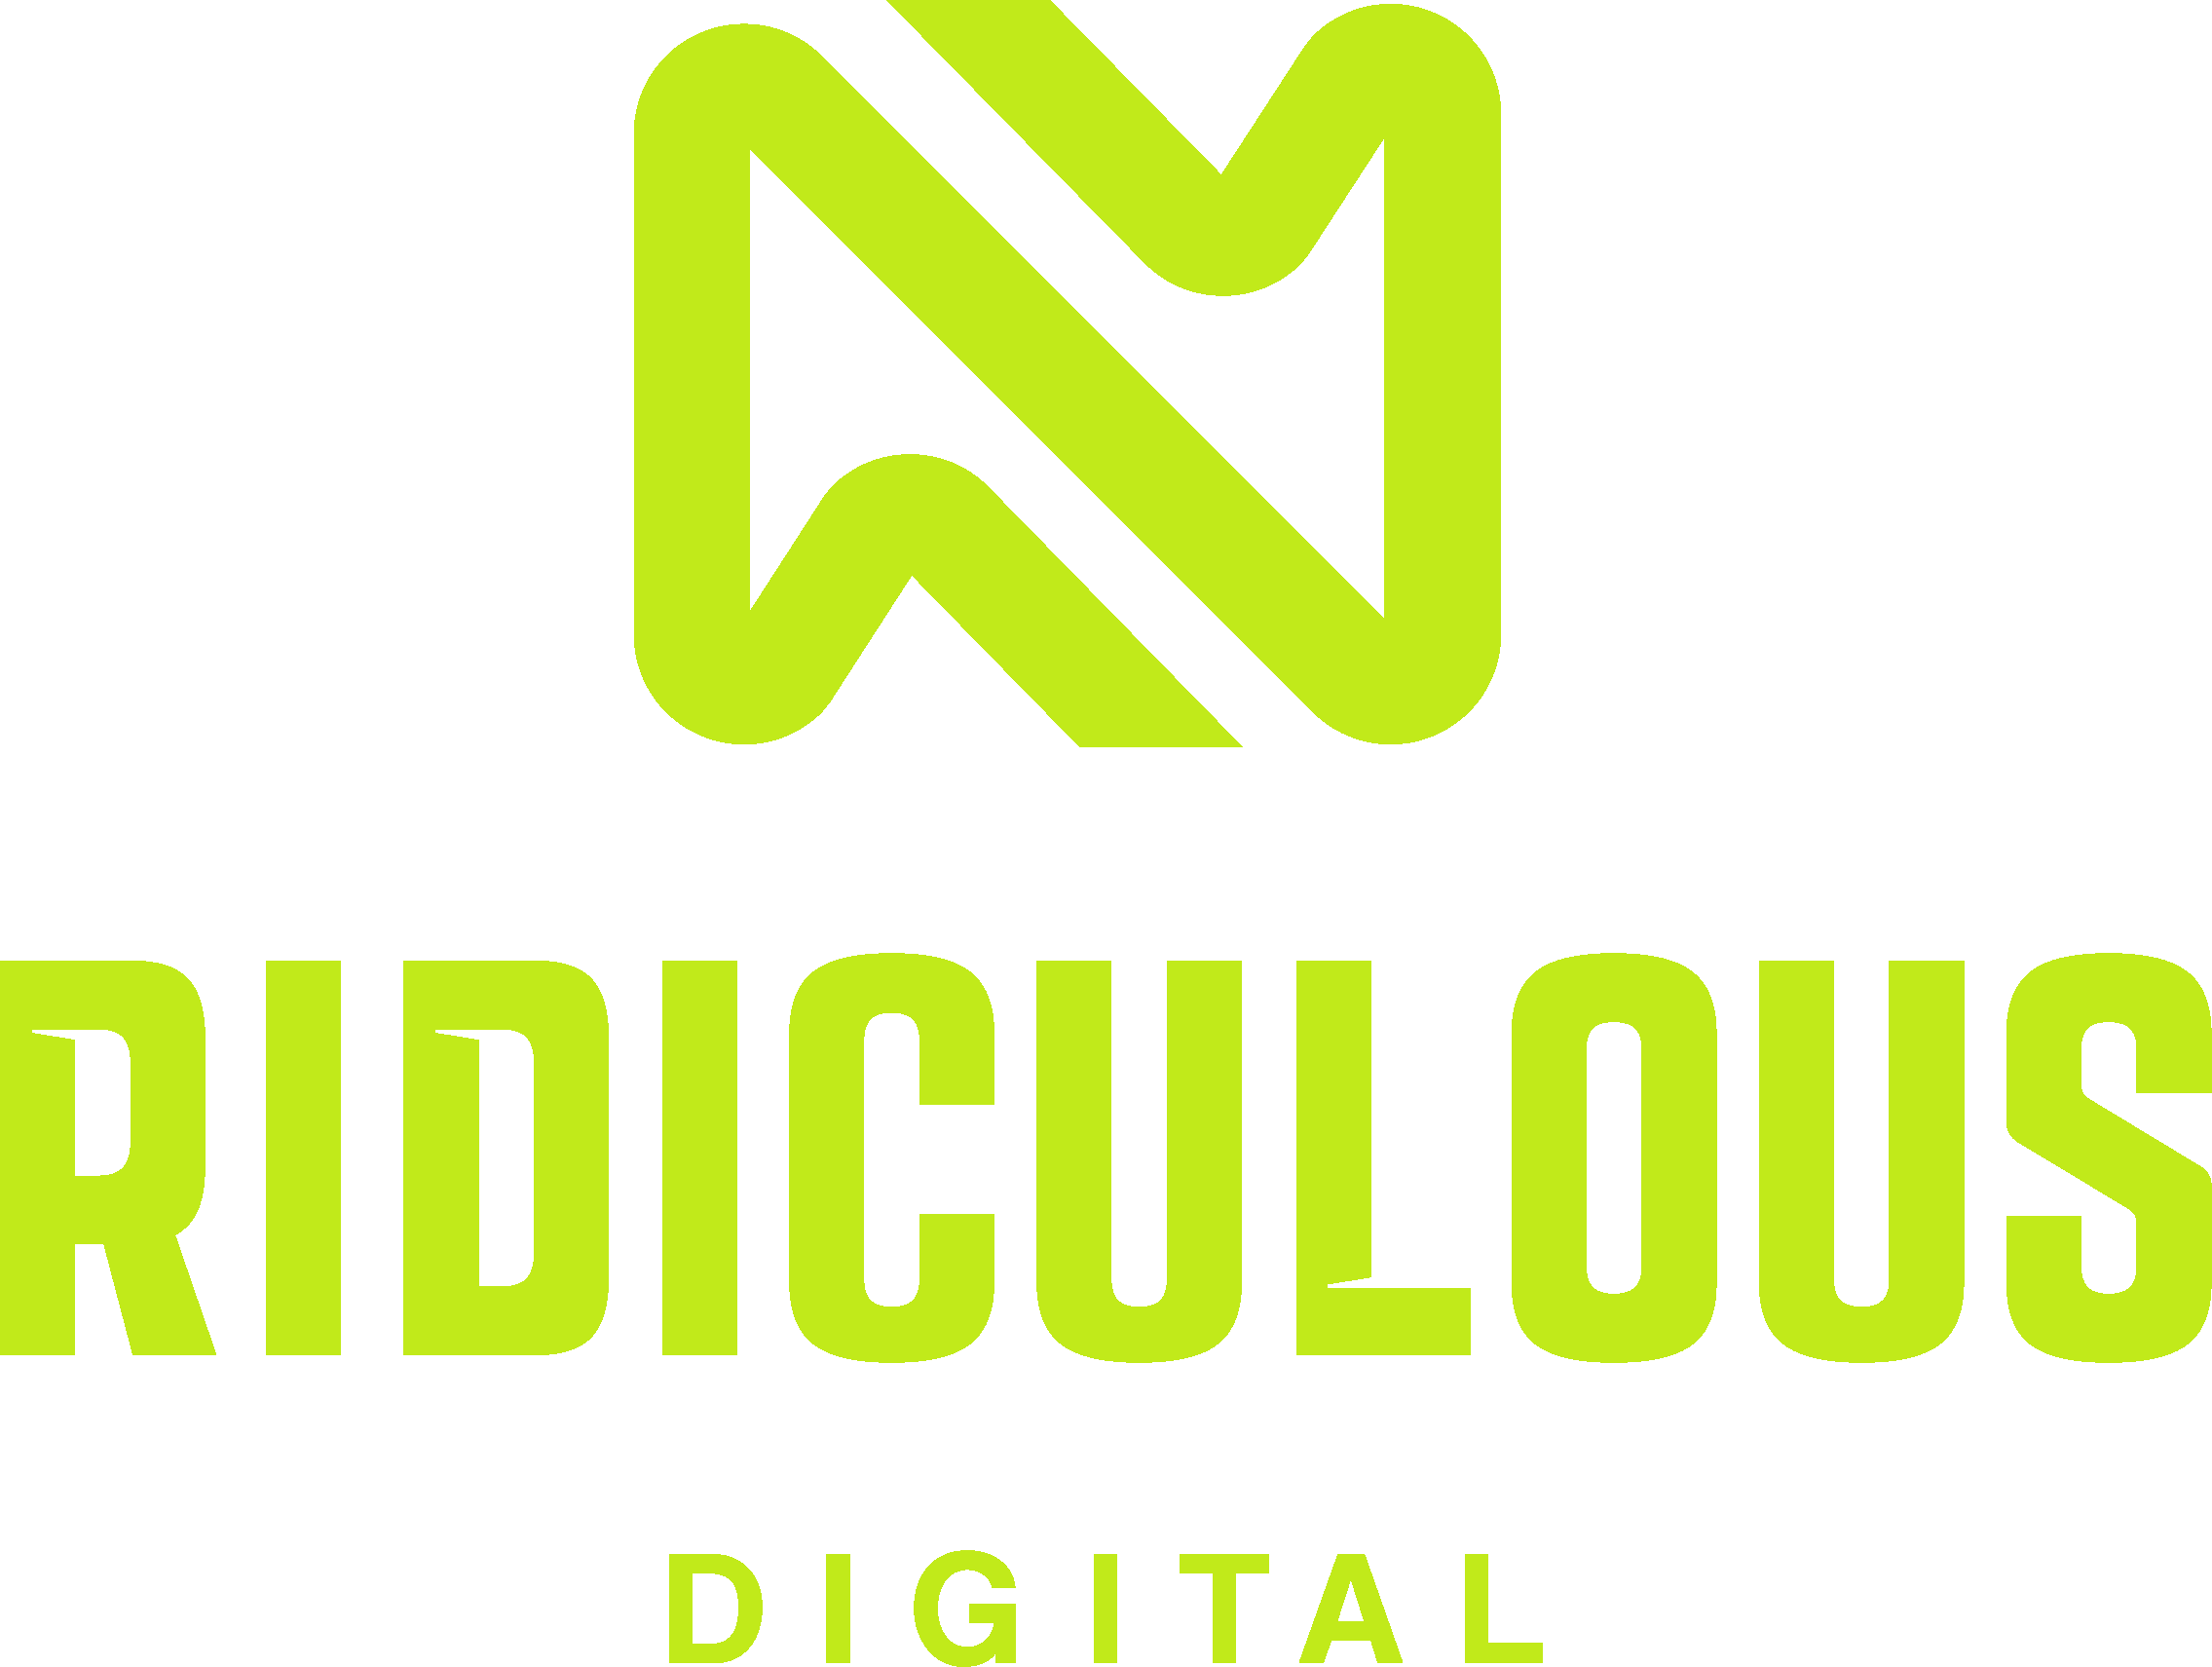 Ridiculous Digital Logo in green